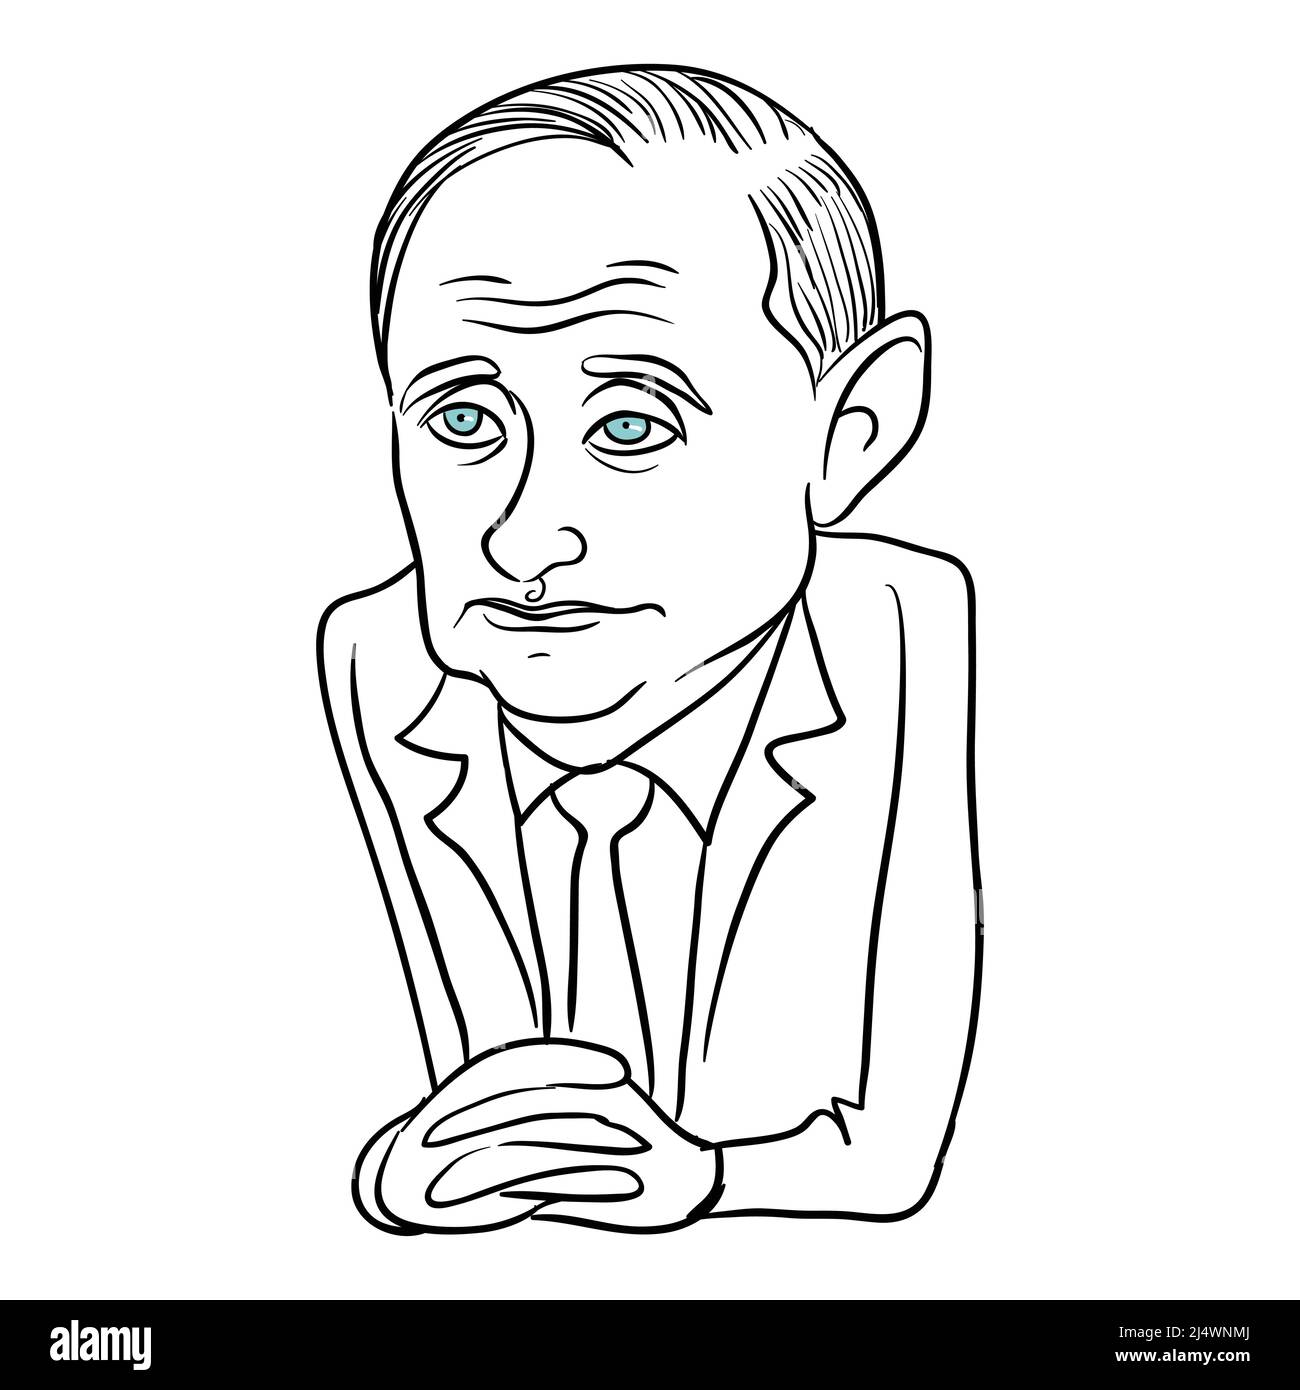 Vladimir Putin Caricature Illustration  Vector Stock Vector